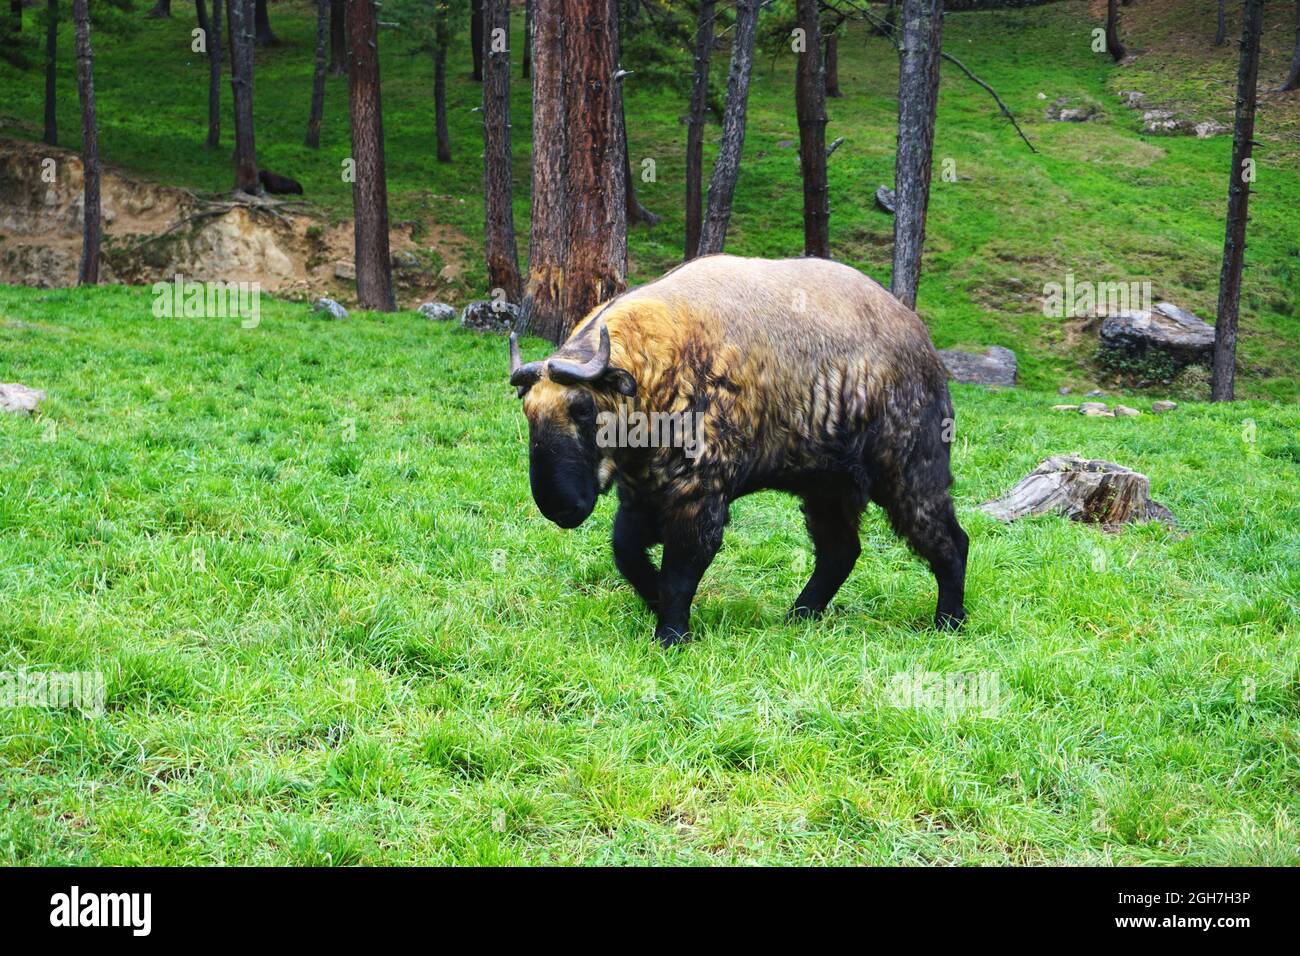 Bhutan national animal hi-res stock photography and images - Alamy